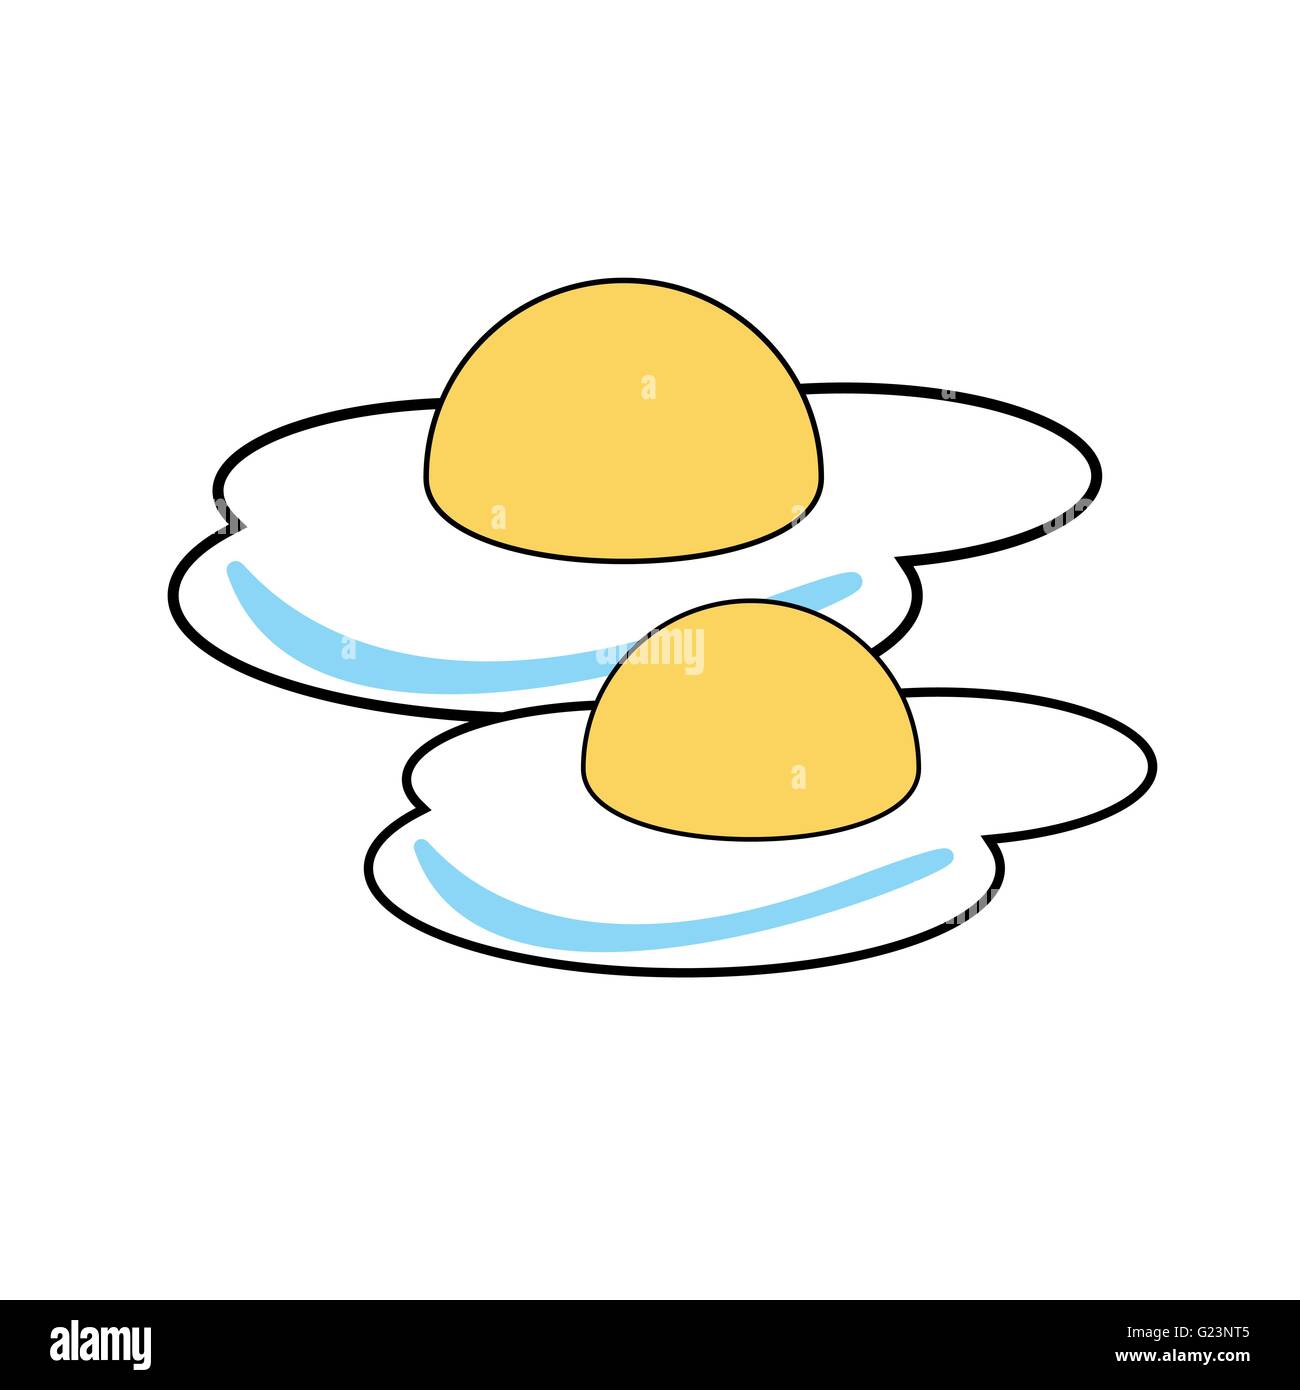 Fried Eggs vector illustration Stock Vector